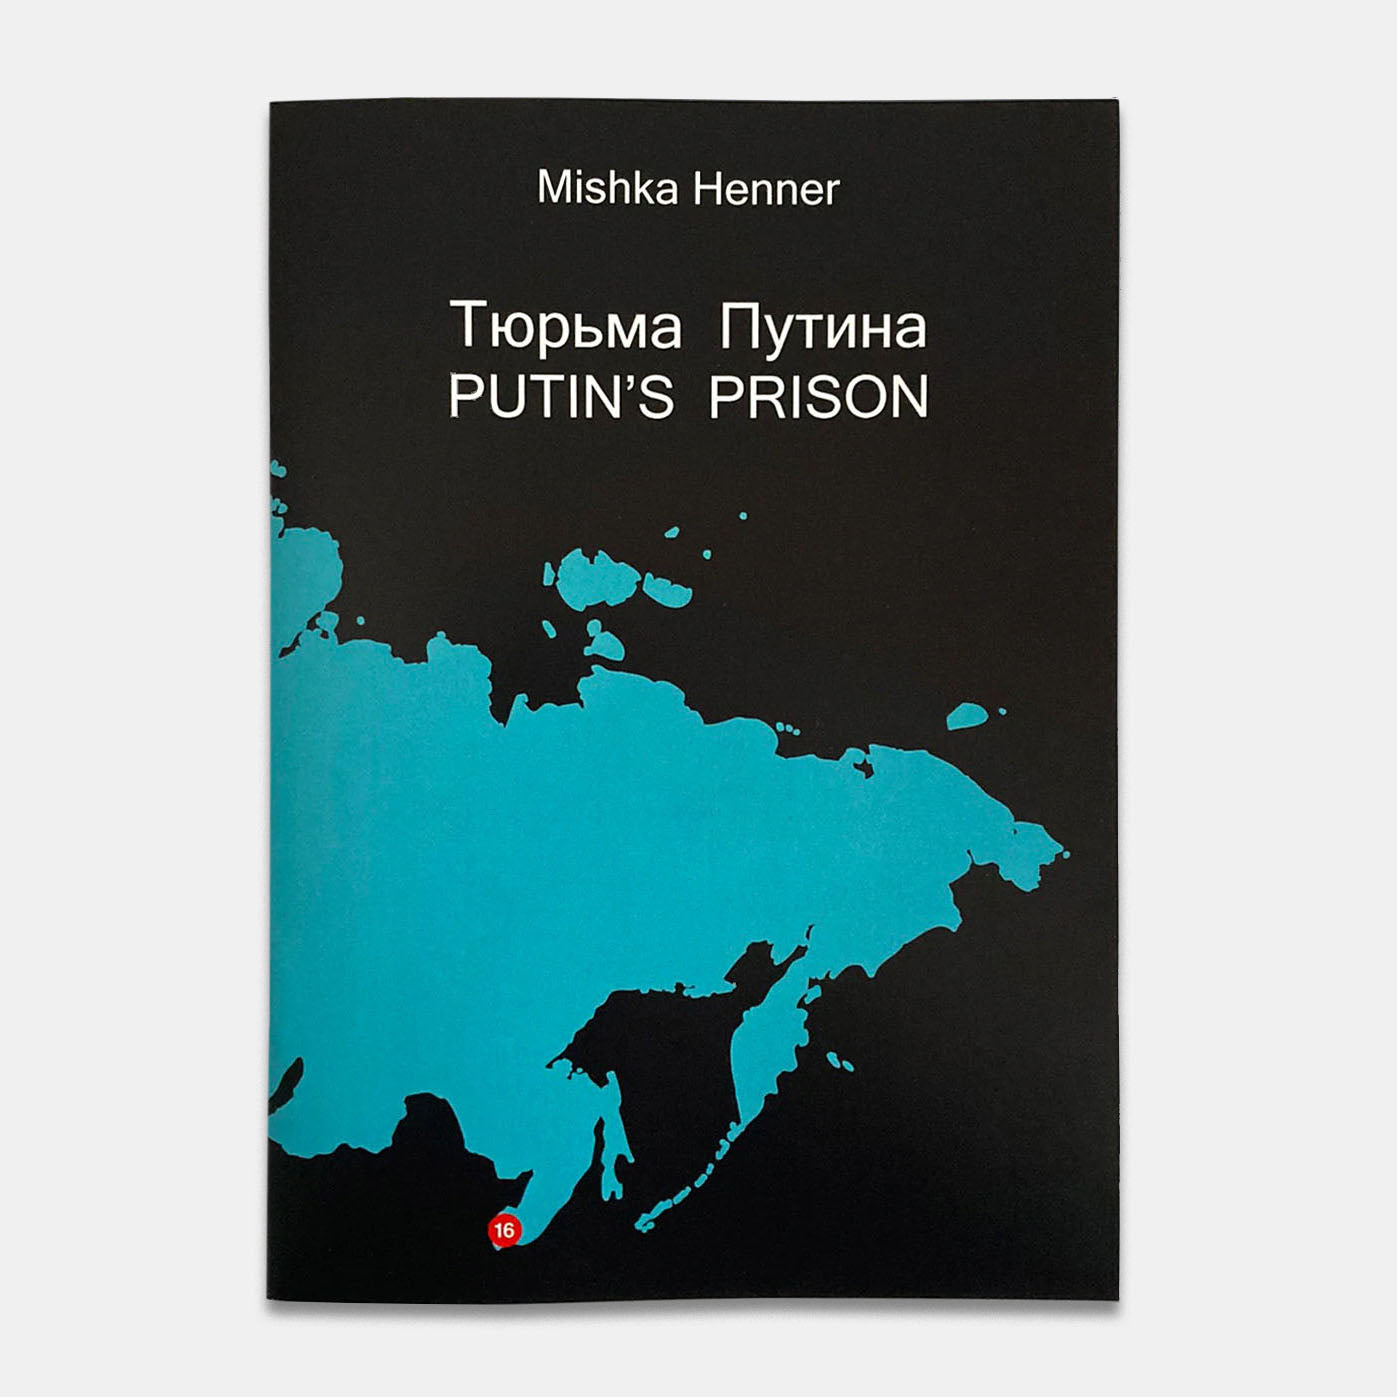 Putin’s Prison